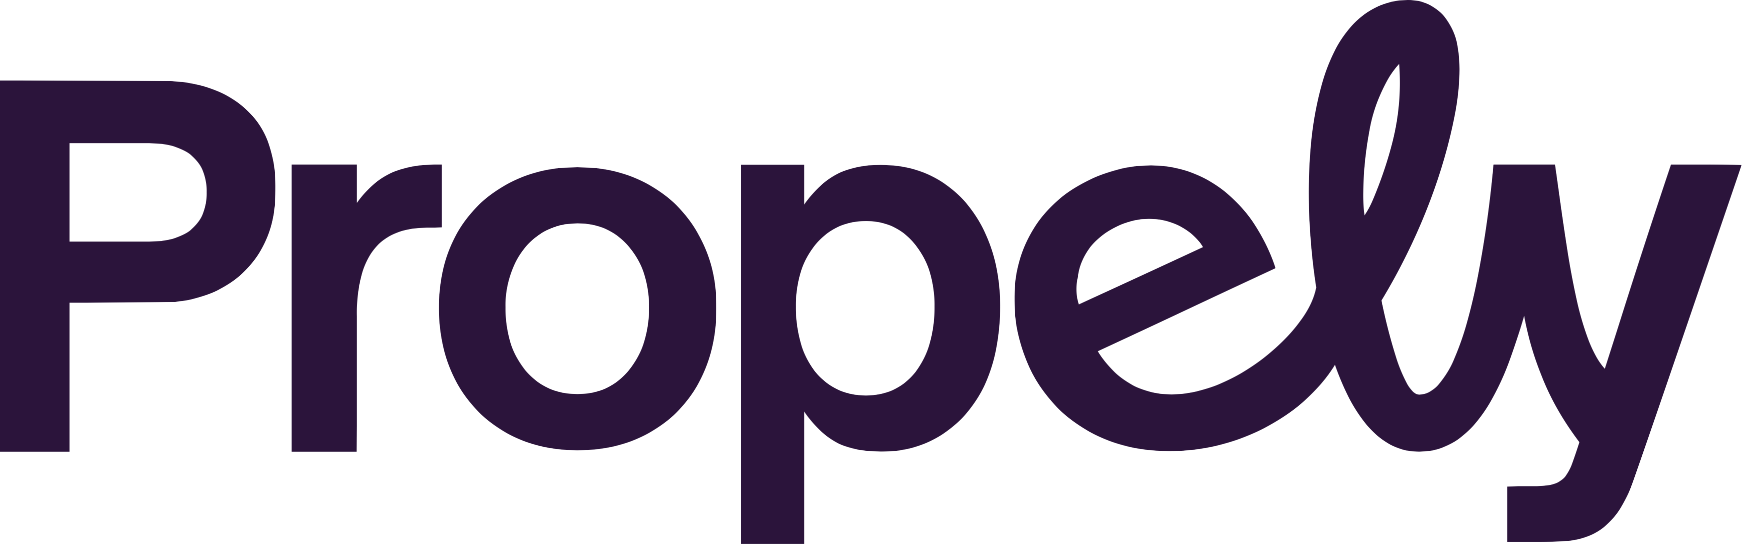 Propely logo